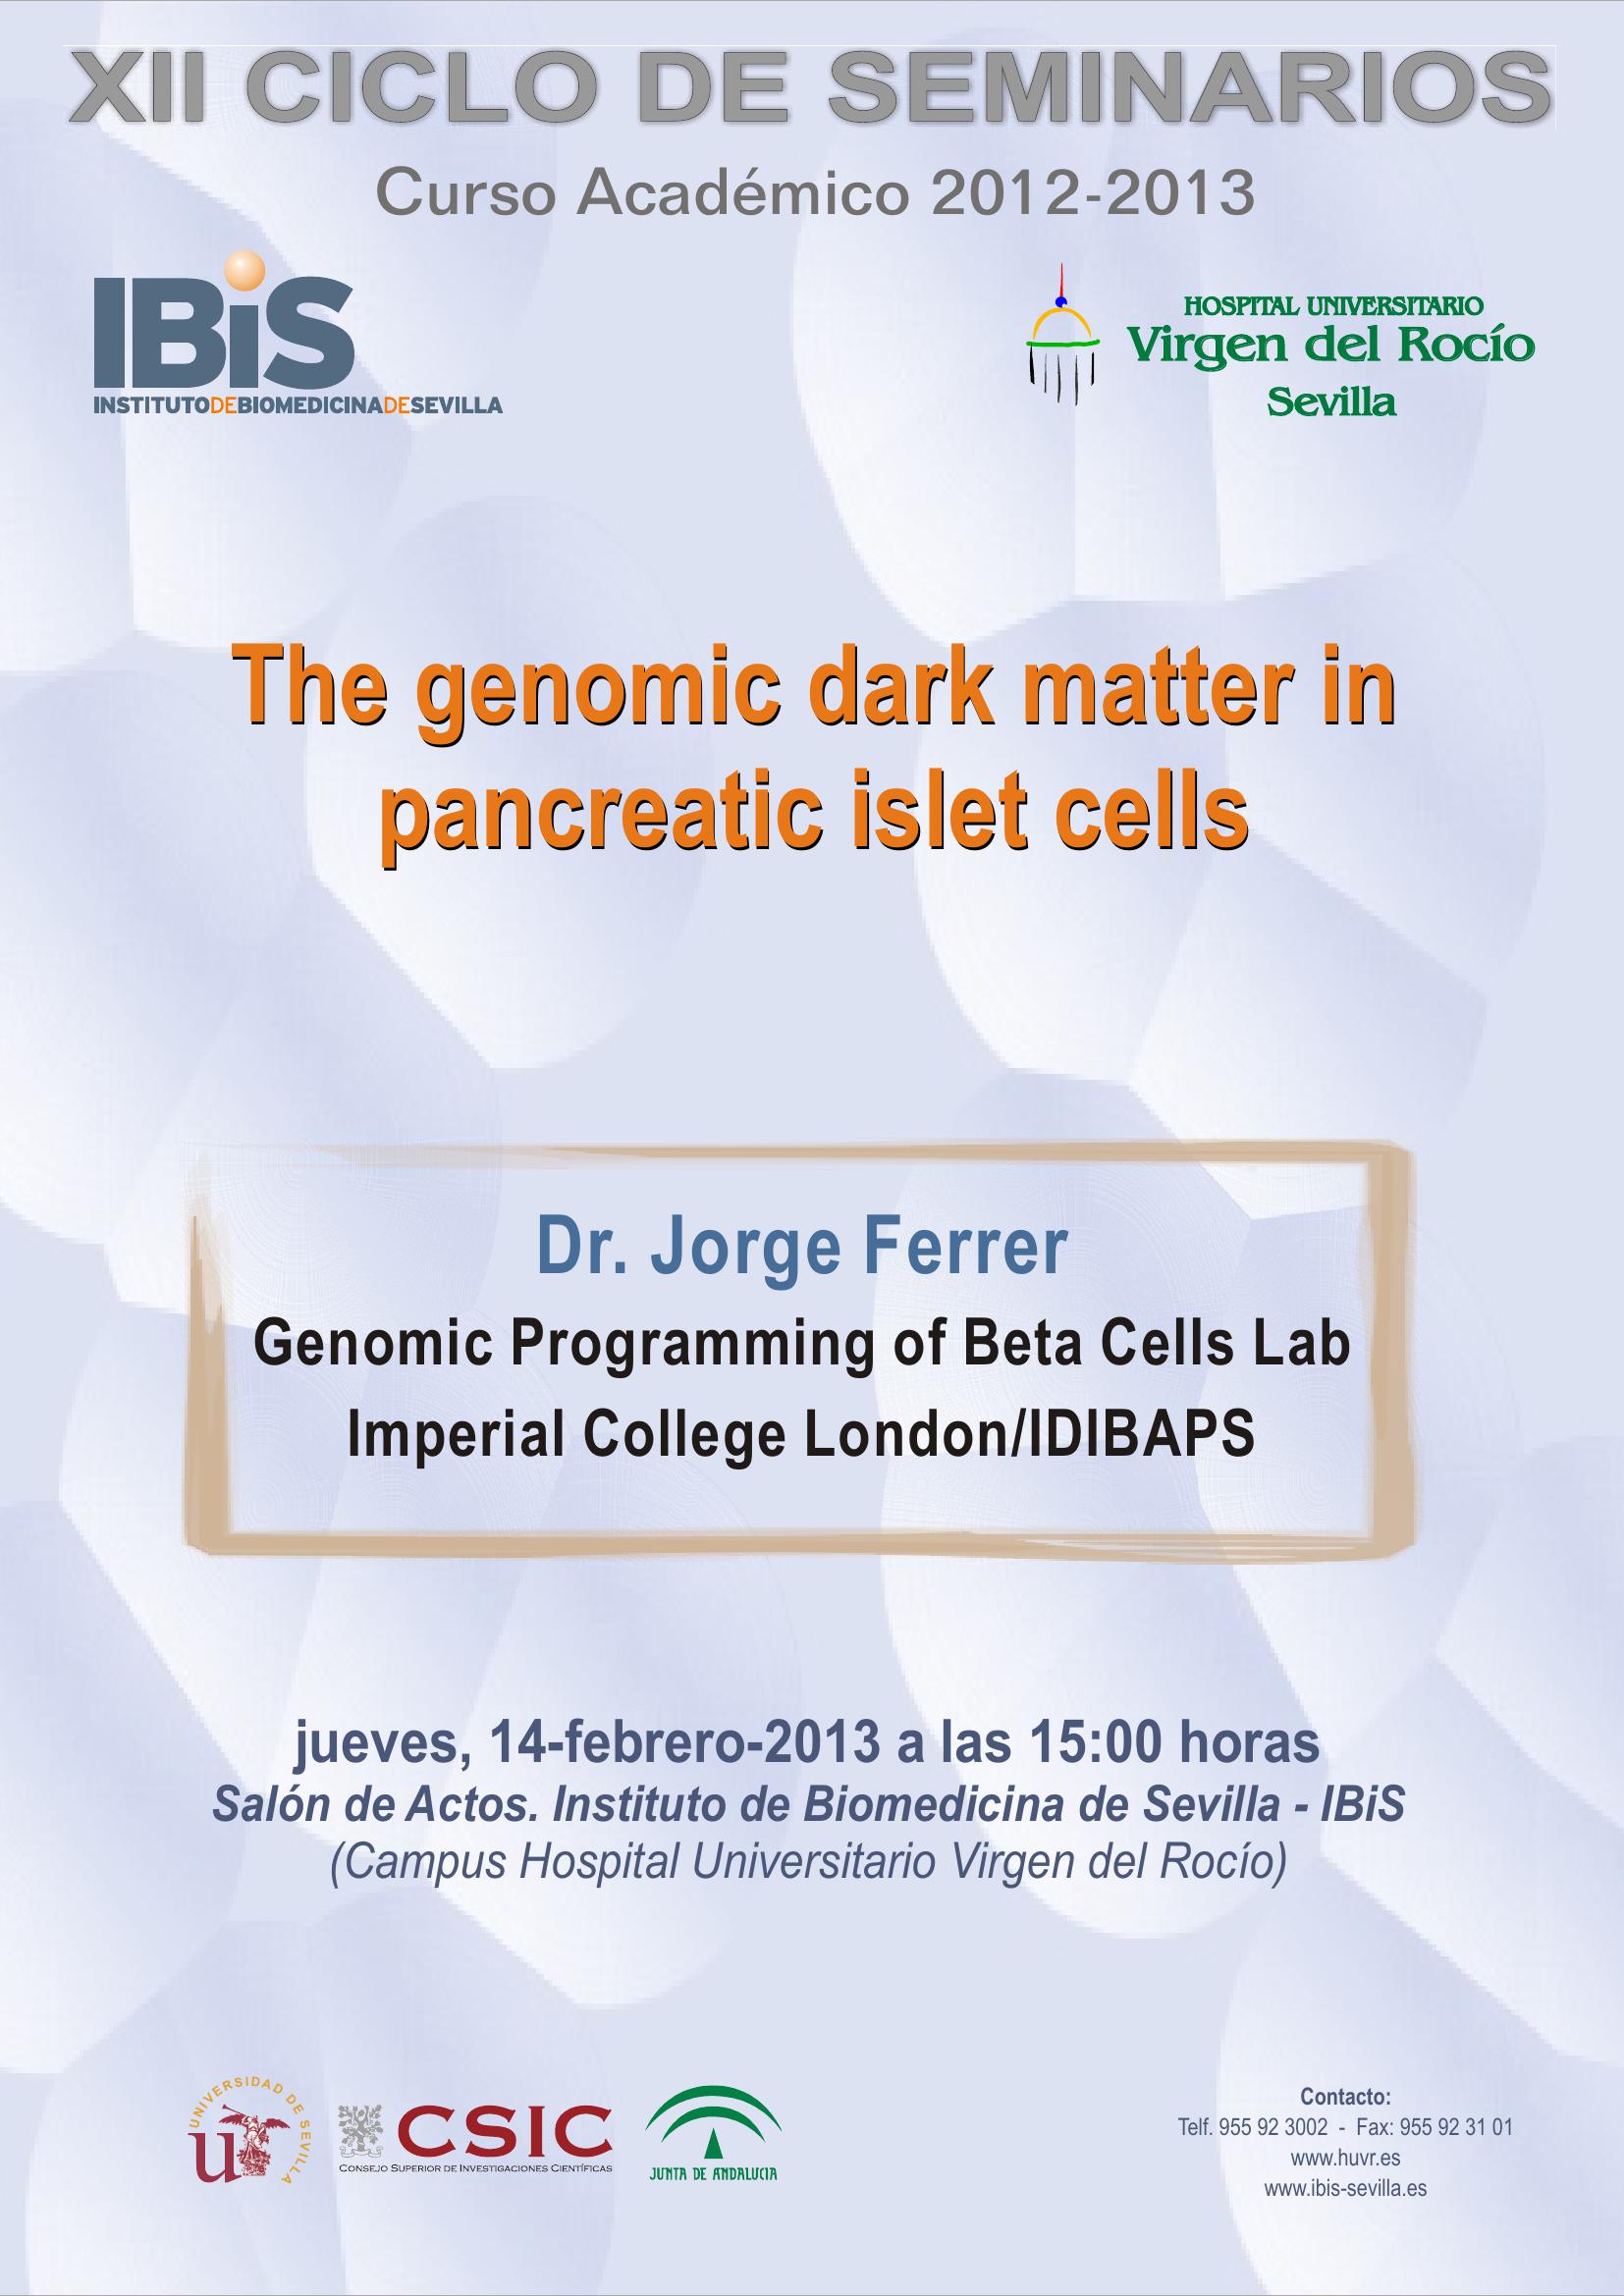 Poster: The genomic dark matter in pancreatic islet cells.